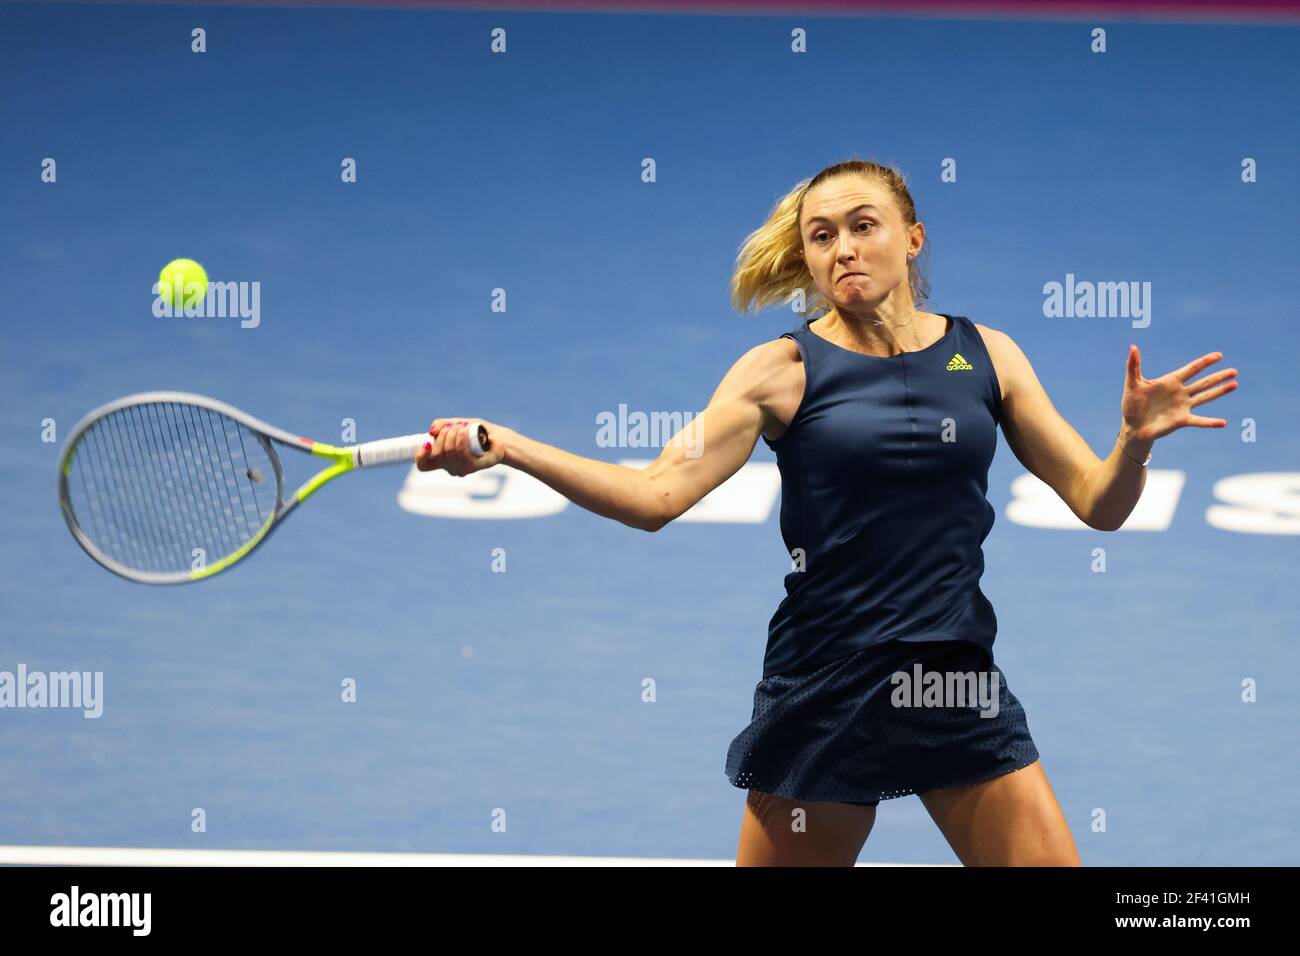 Aliaksandra Sasnovich of Belarus playing against Daria Kasatkina of Russia during the St.Petersburg Ladies Trophy 2021 tennis tournament at Sibur Arena